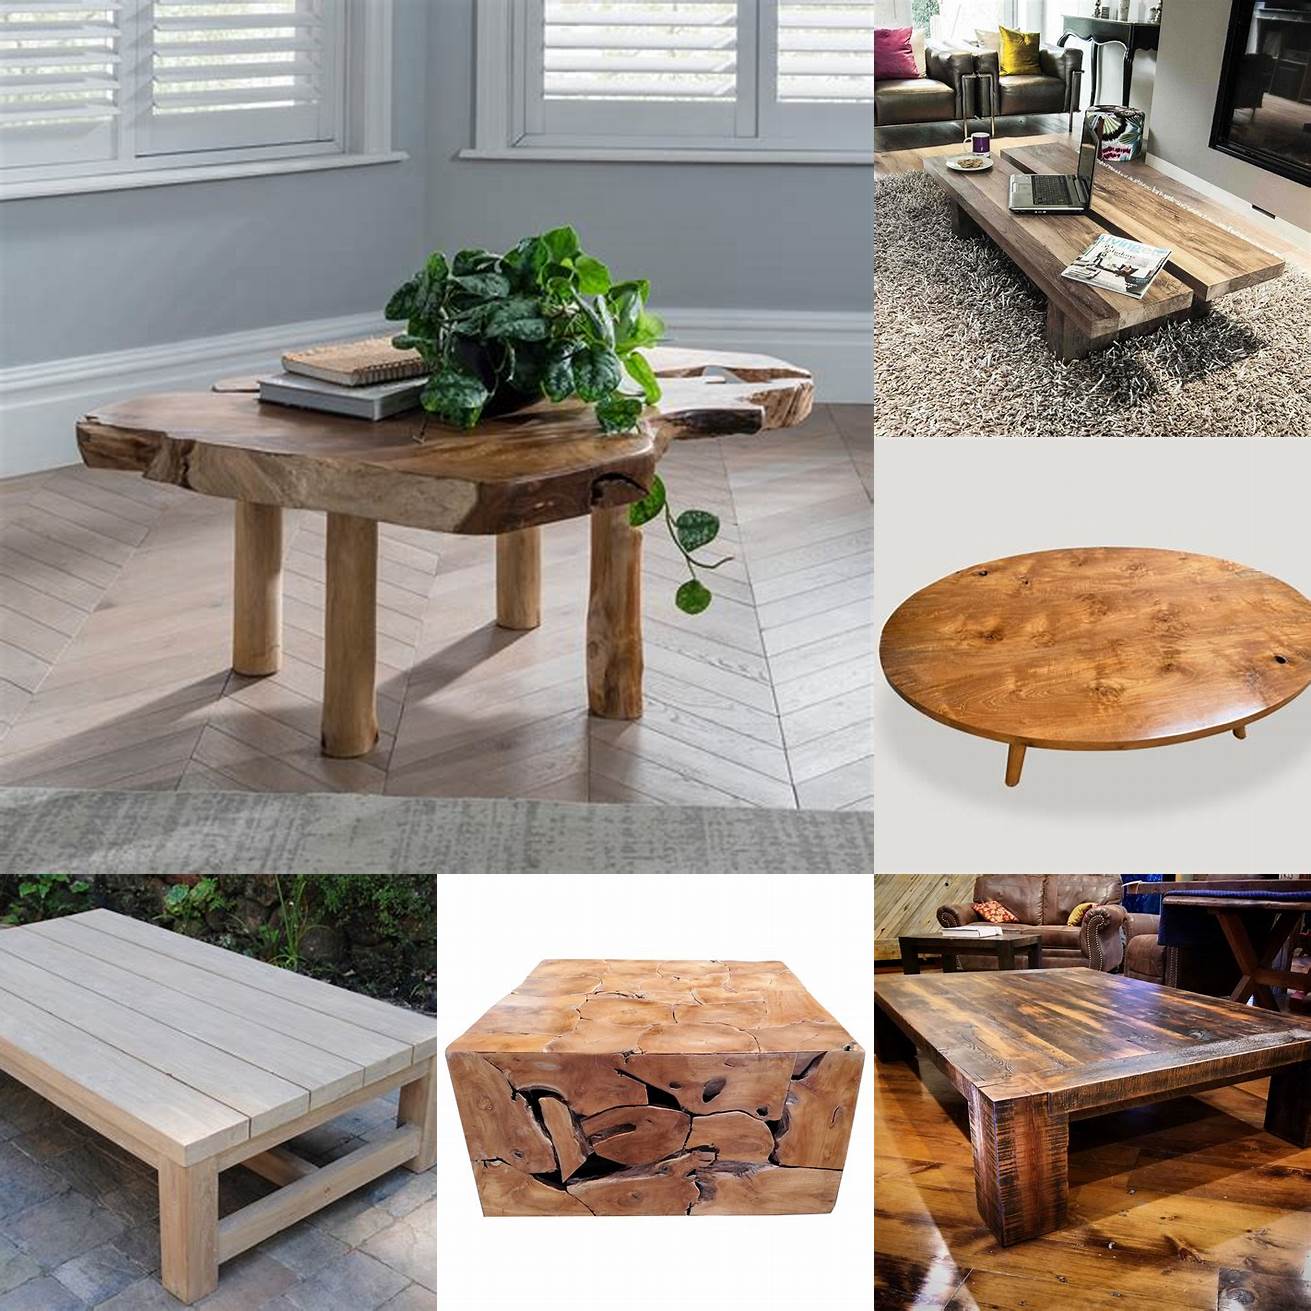 Reclaimed teak wood coffee table